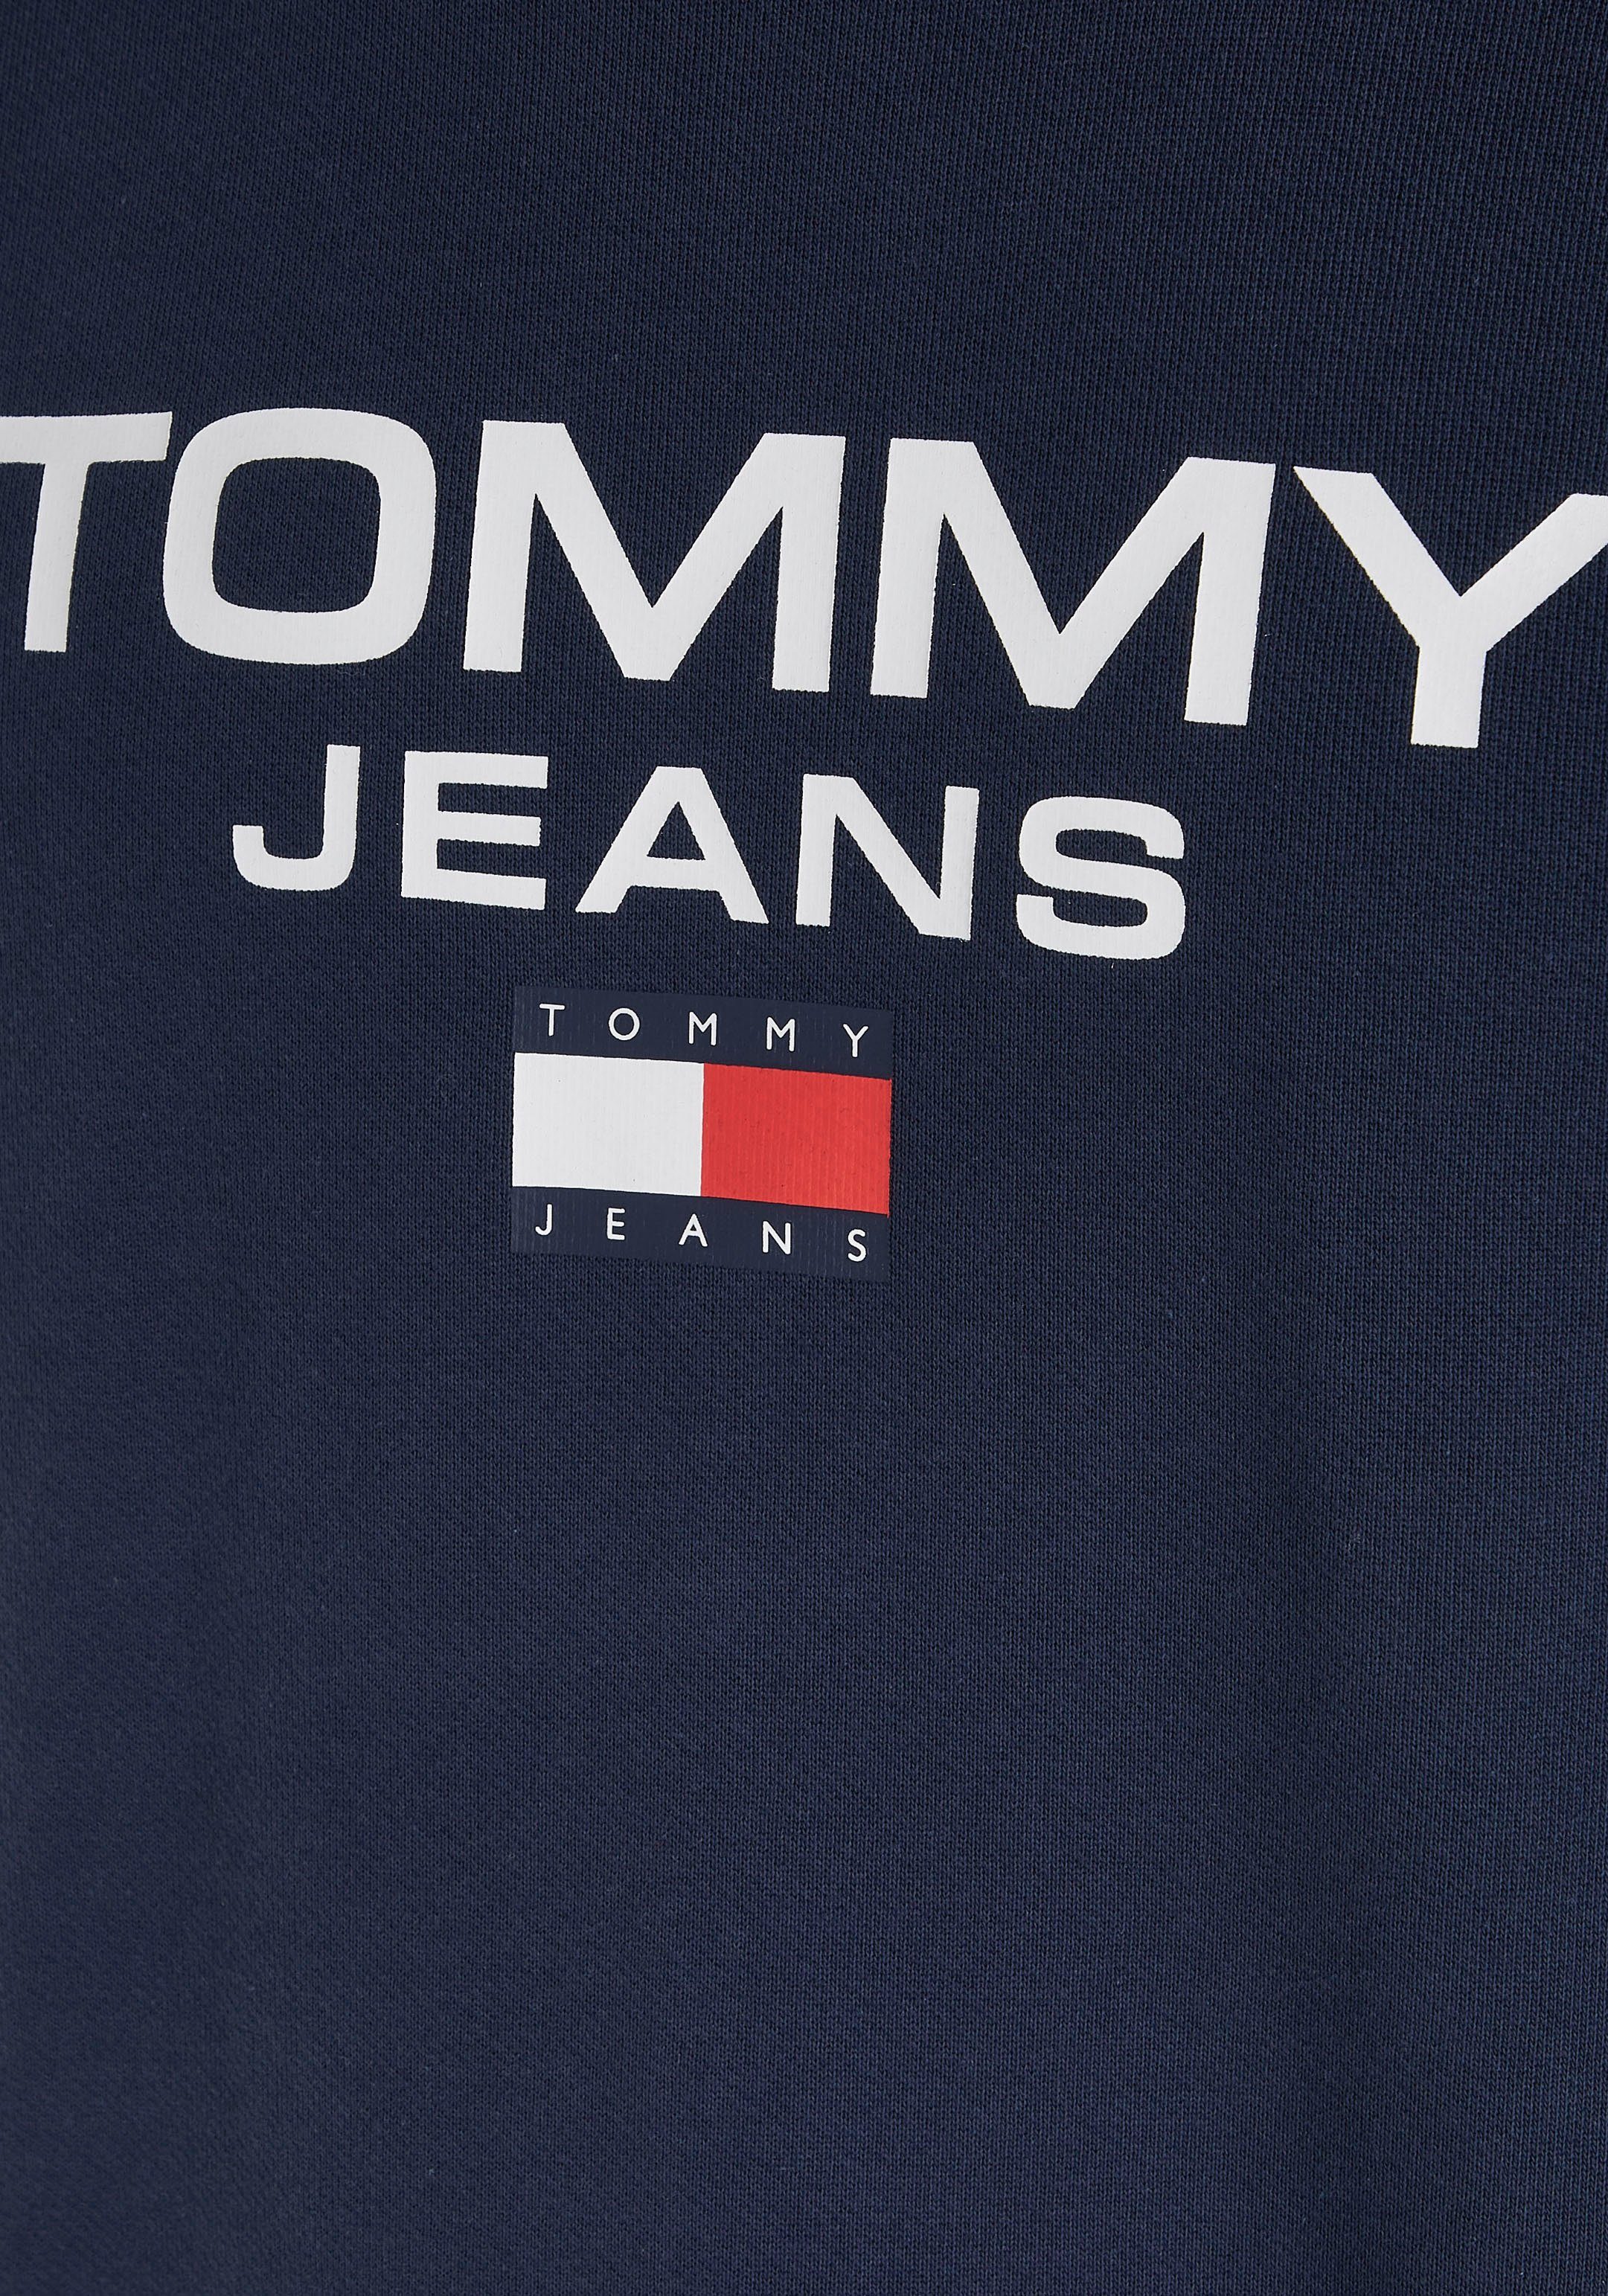 REG Logodruck CREW ENTRY Tommy mit Sweatshirt Navy Twilight TJM Jeans